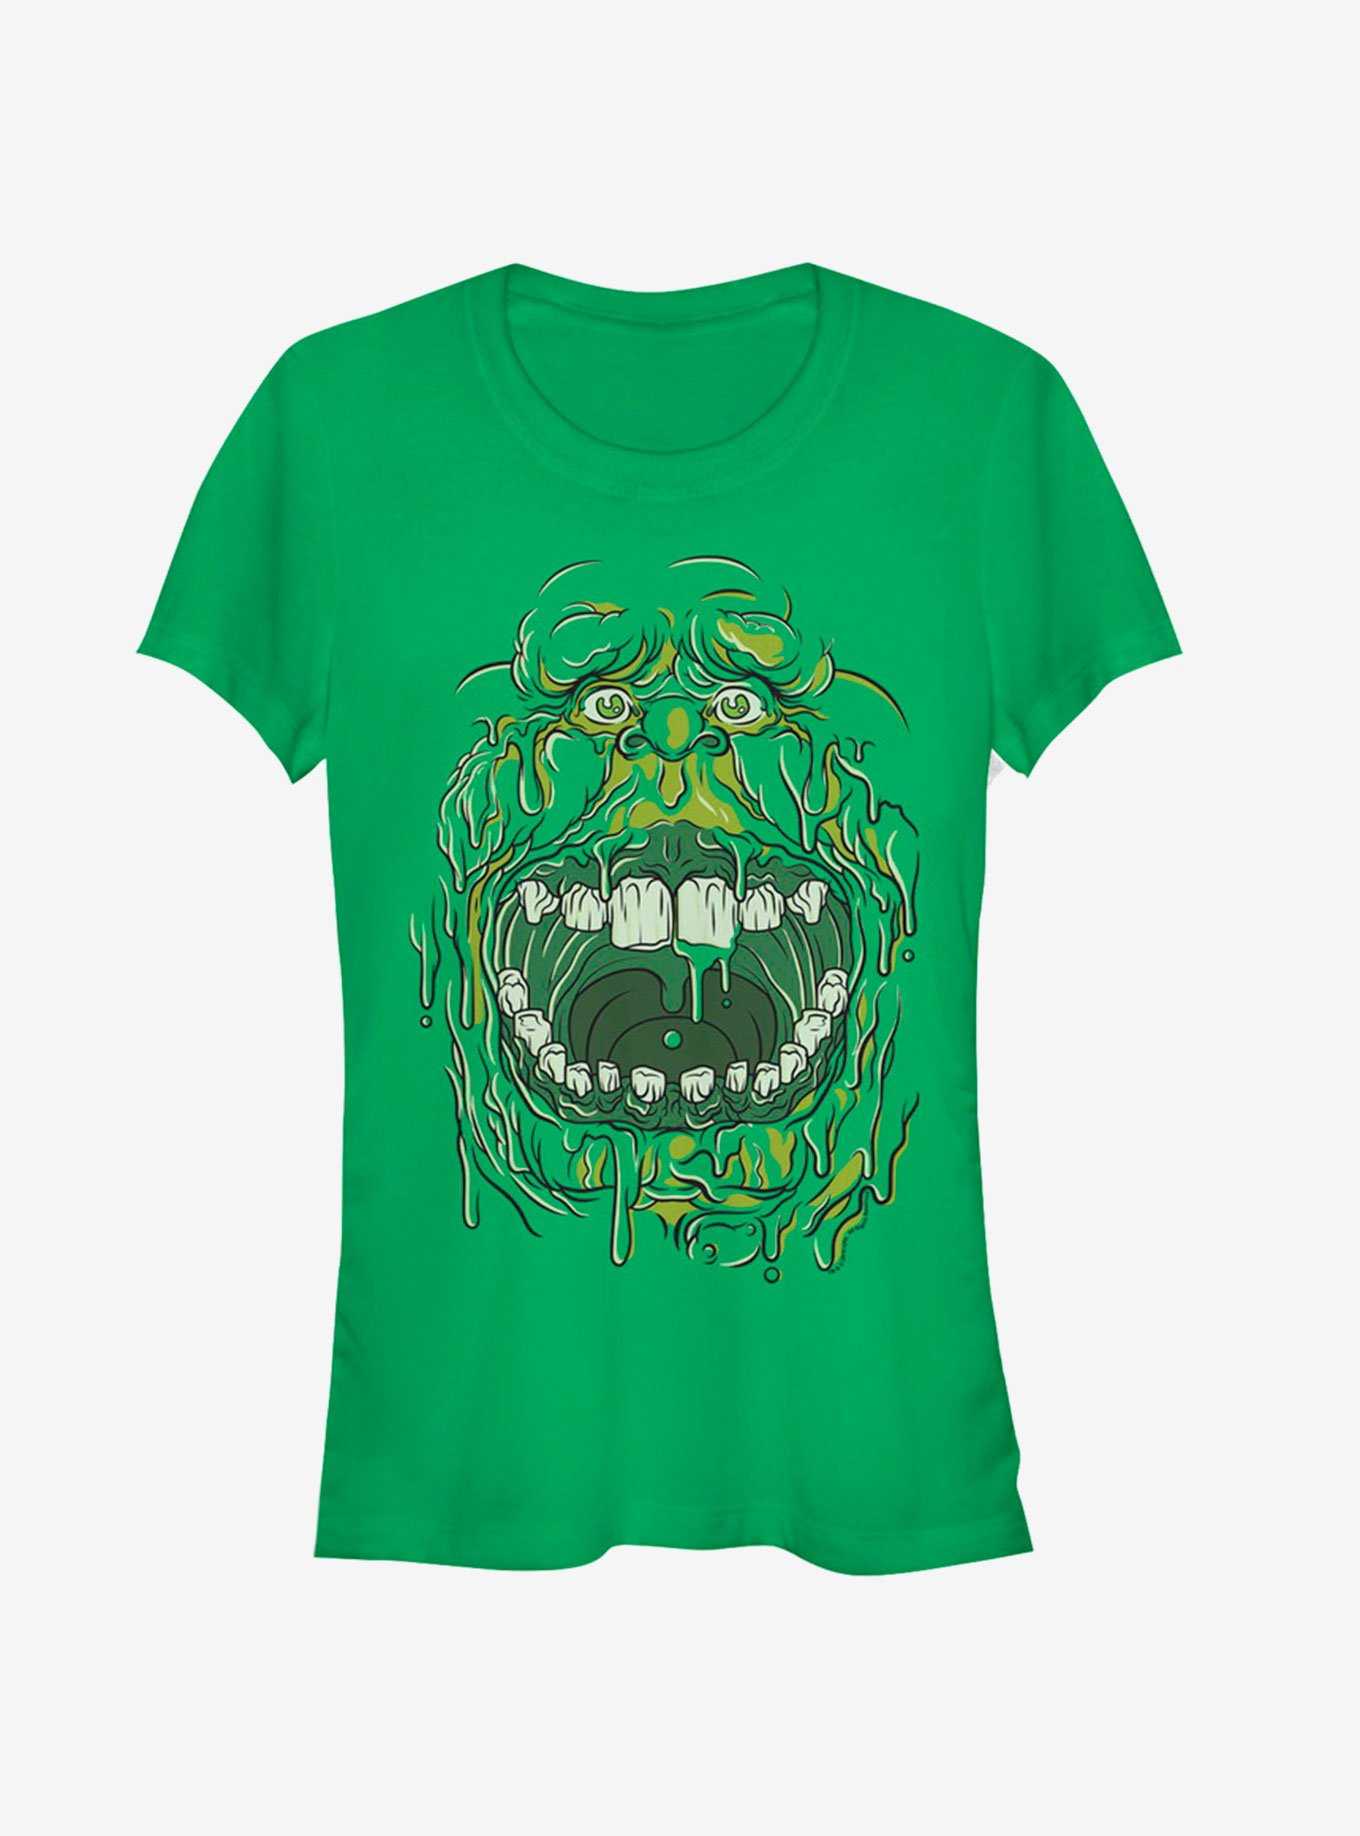 Ghostbusters Slimer Face Costume Girls T-Shirt, , hi-res